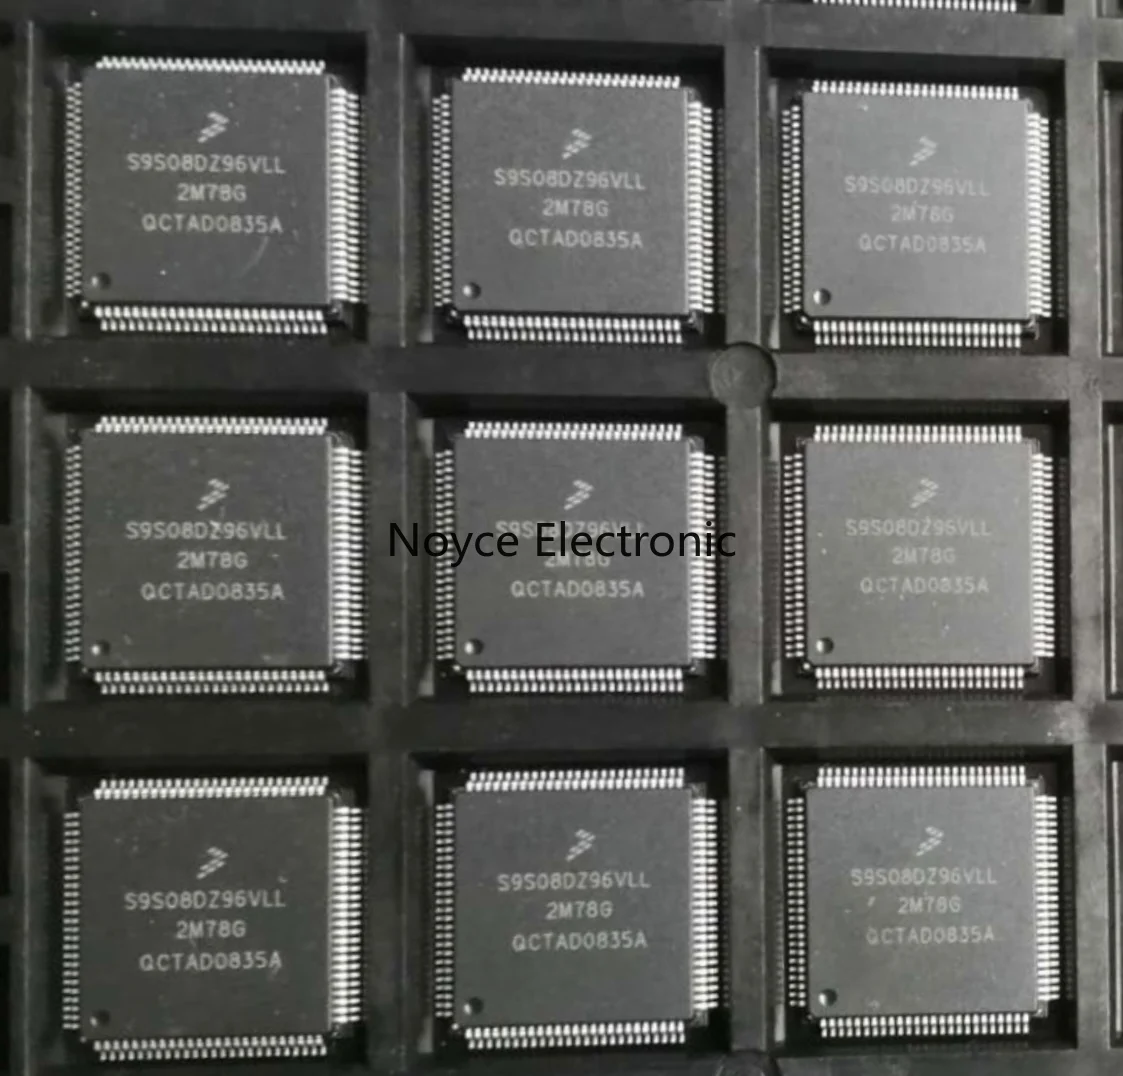 1pcs pic16f877a i p pic16f877a i pt pic16f877a i l dip40 lqfp44 plcc44 microcontroller chip 1pcs/S9S08DZ96 new original genuine spot S9S08DZ96VLL TQFP100 microcontroller chip